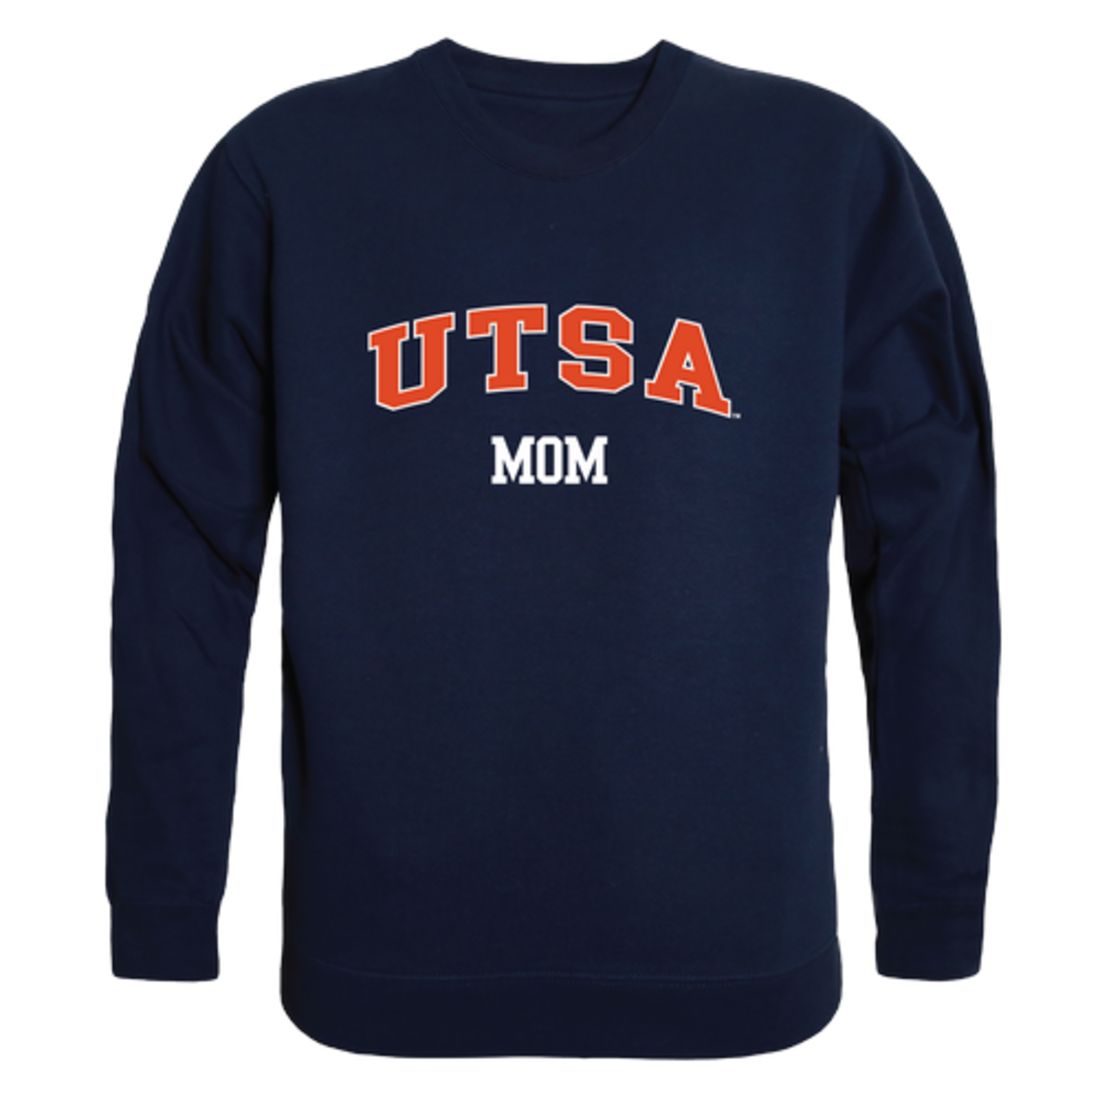 UTSA University of Texas at San Antonio Roadrunners Mom Fleece Crewneck Pullover Sweatshirt Heather Grey Small-Campus-Wardrobe